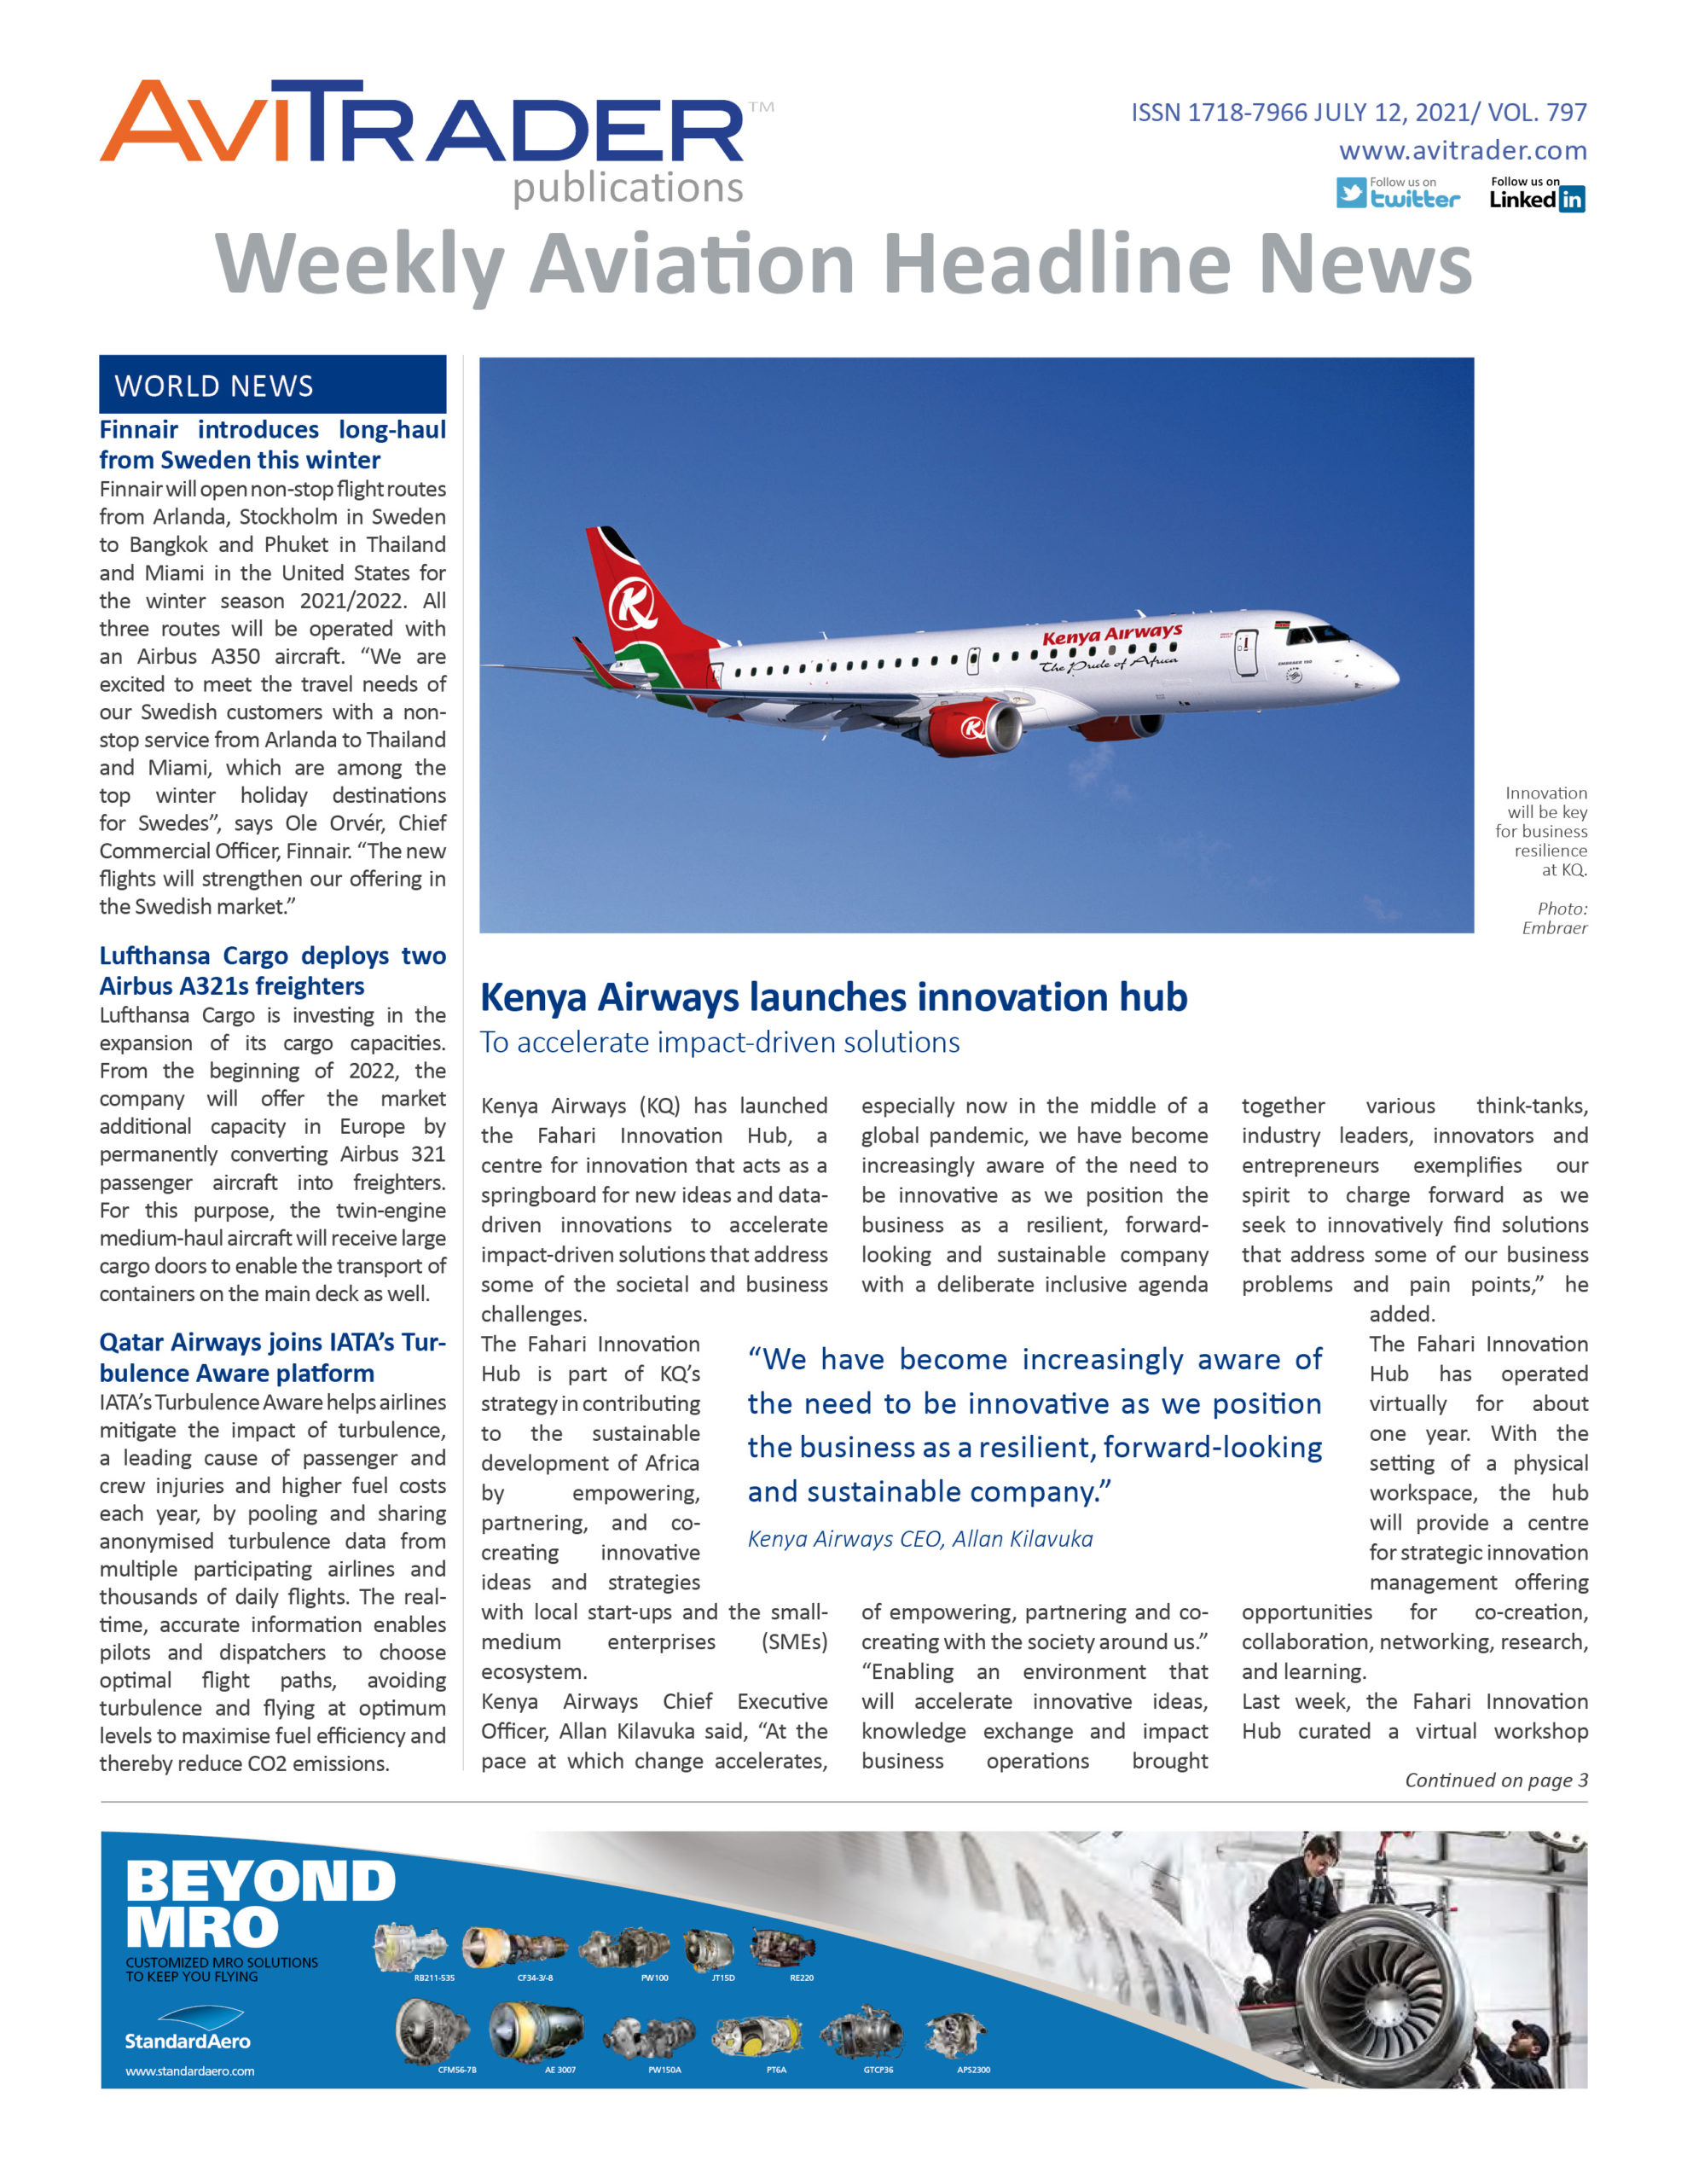 AviTrader_Weekly_Headline_News_Cover_2021-07-12